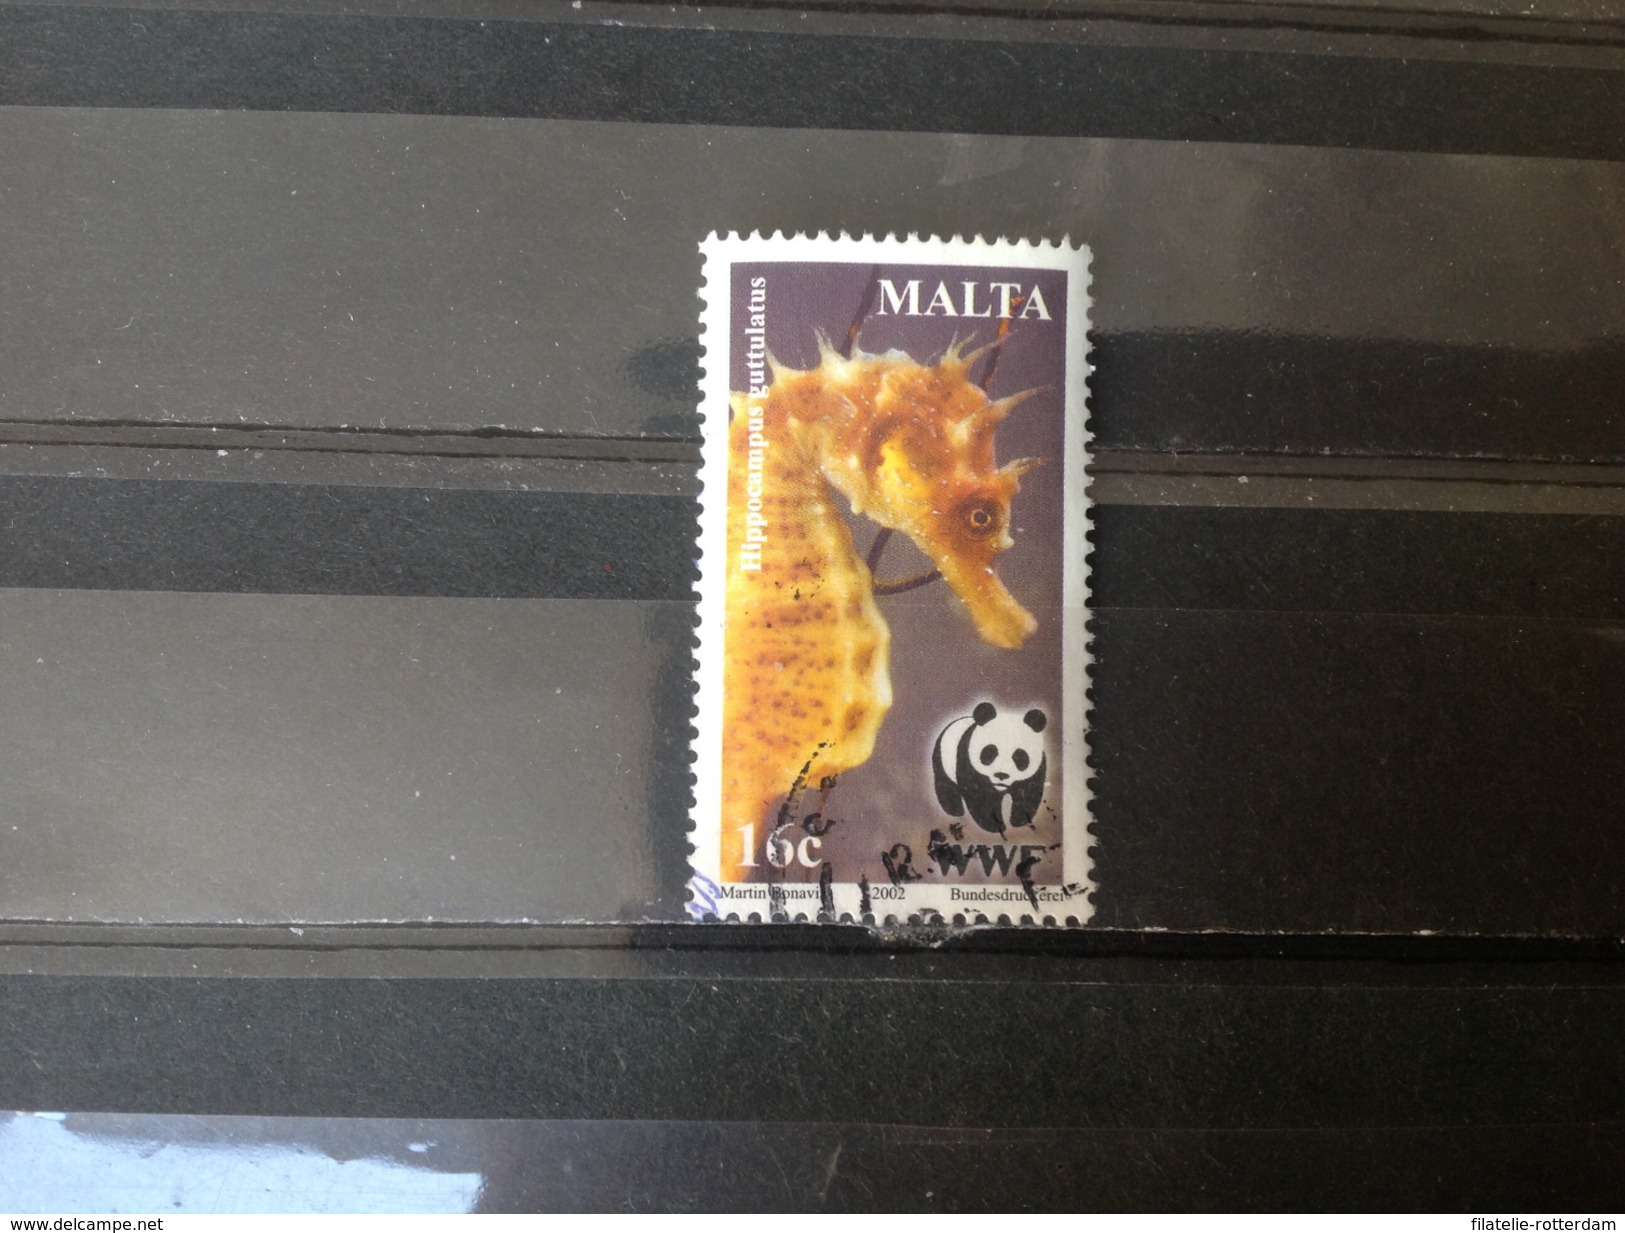 Malta / Malte - WWF, Zeepaardjes (16) 2002 - Malta